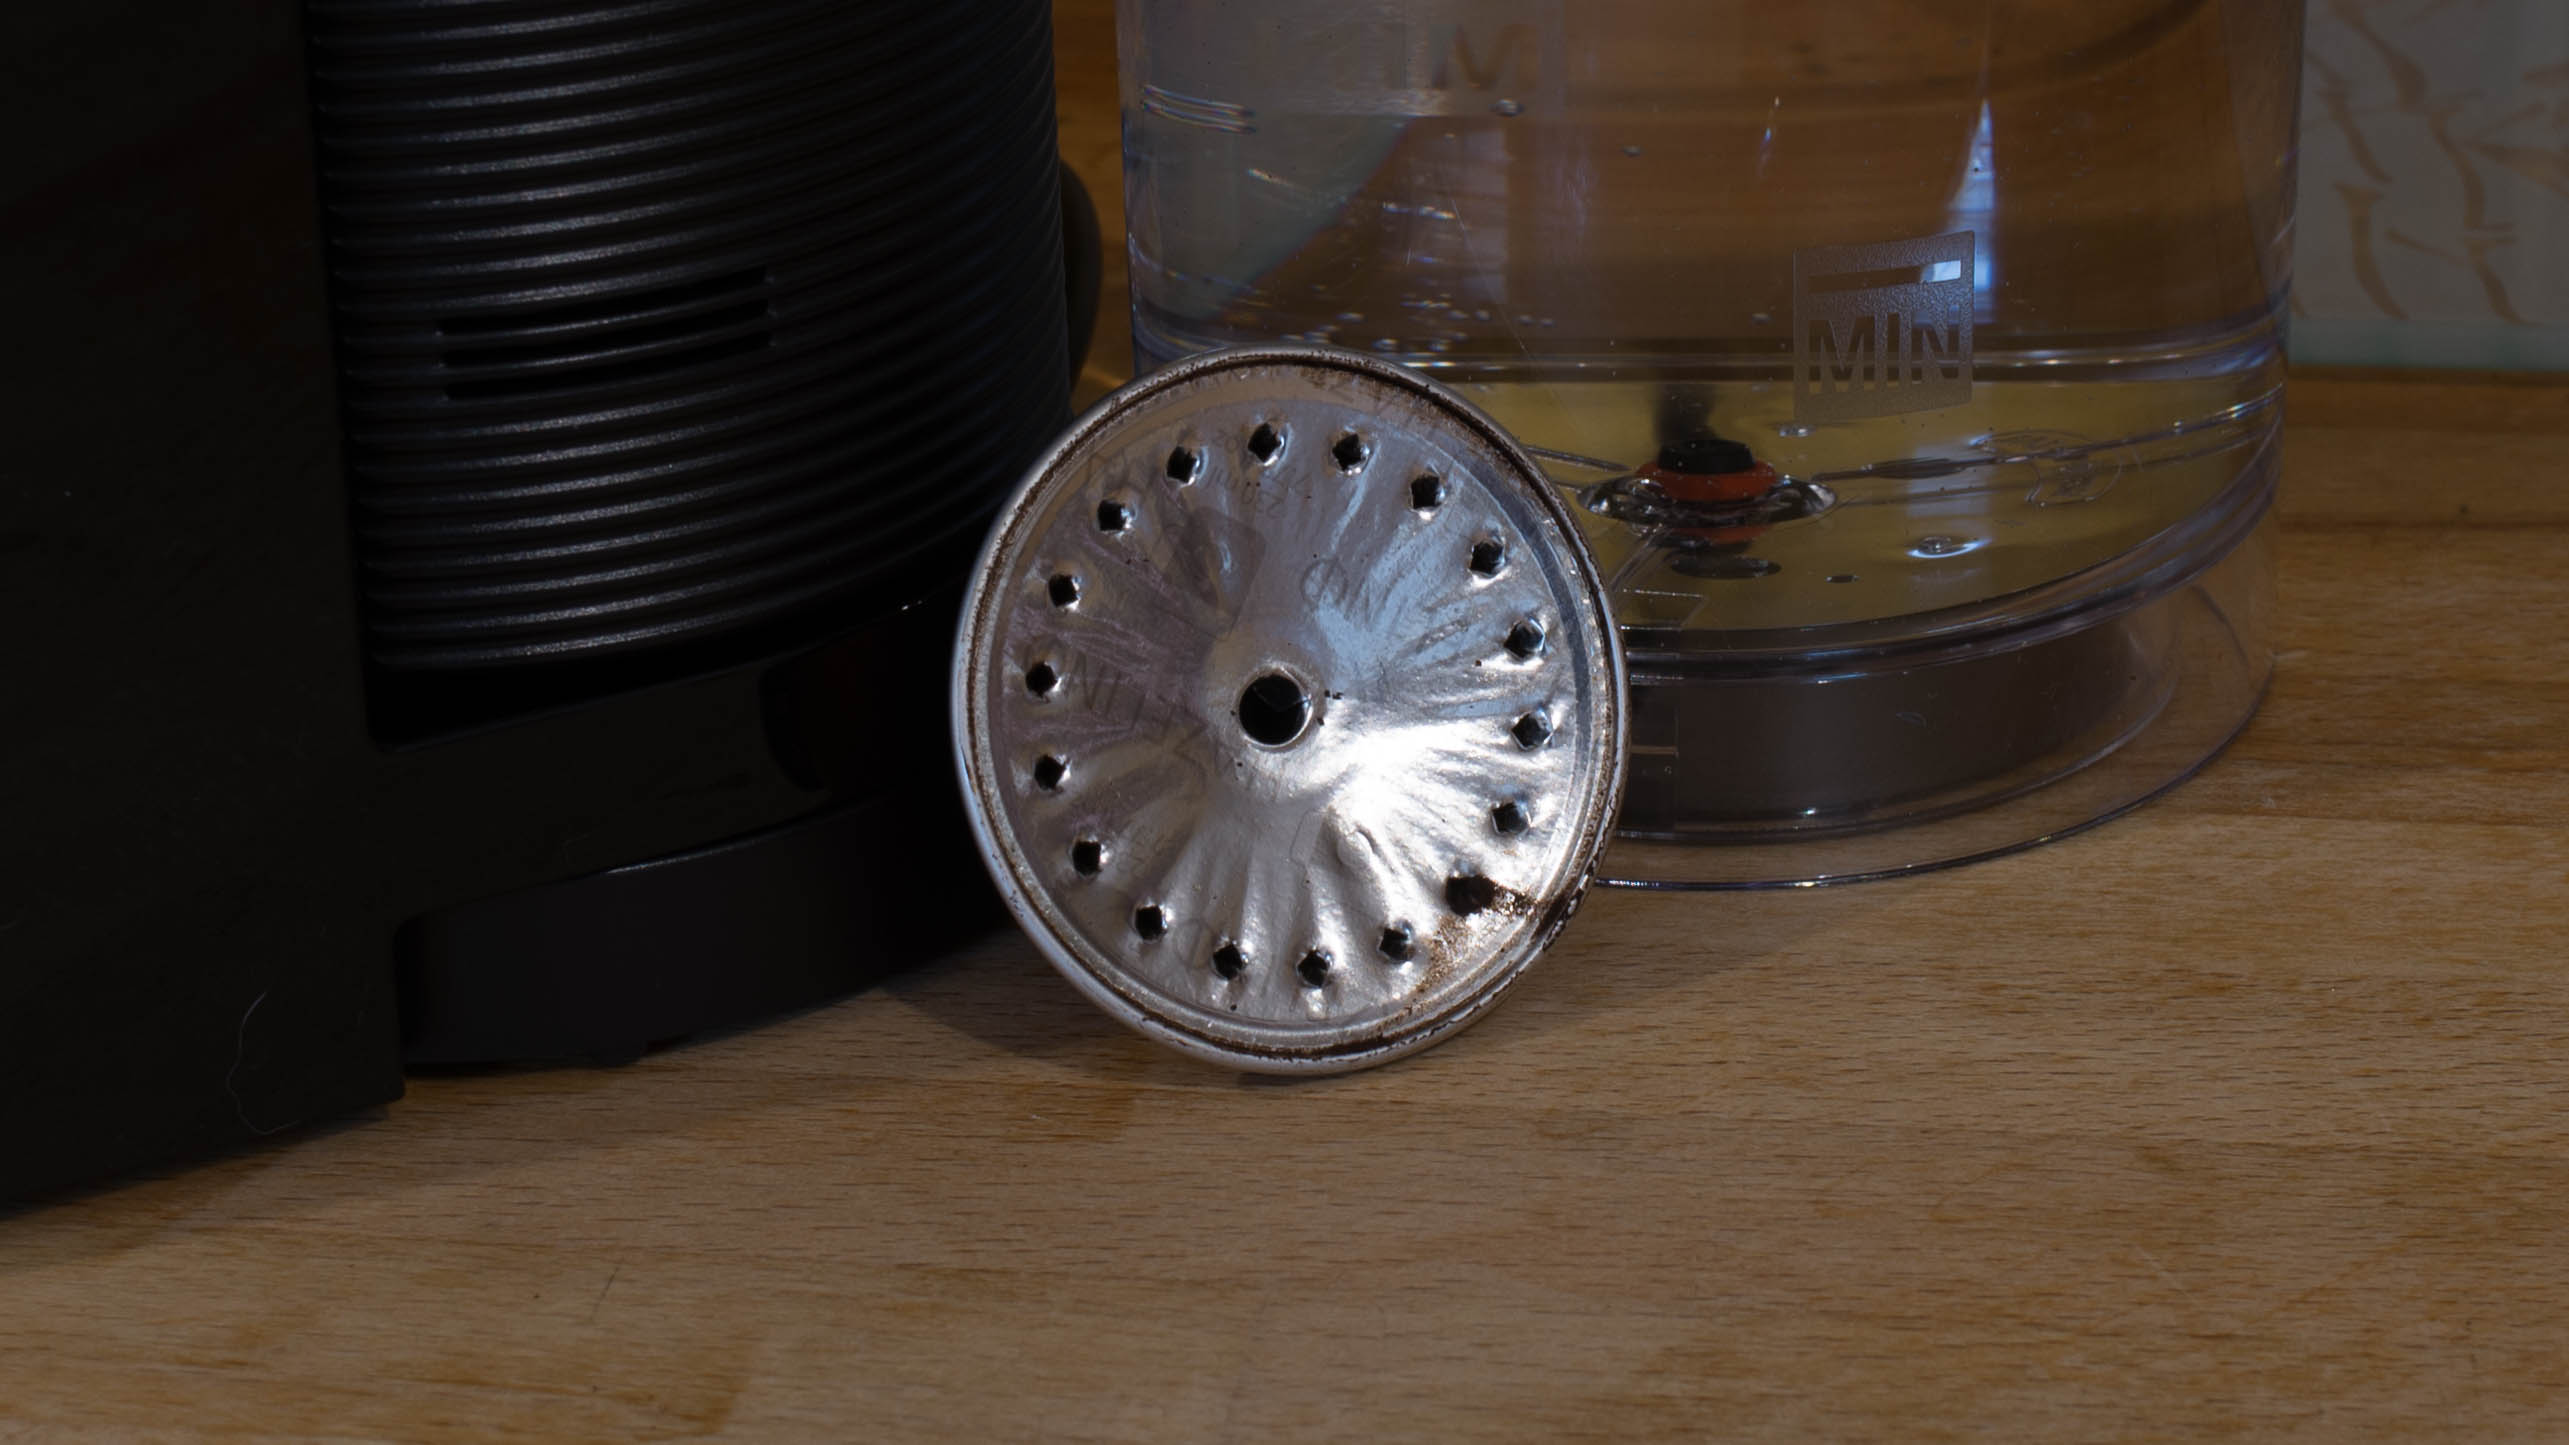 Used Nespresso Vertuo capsule with coffee machine background.